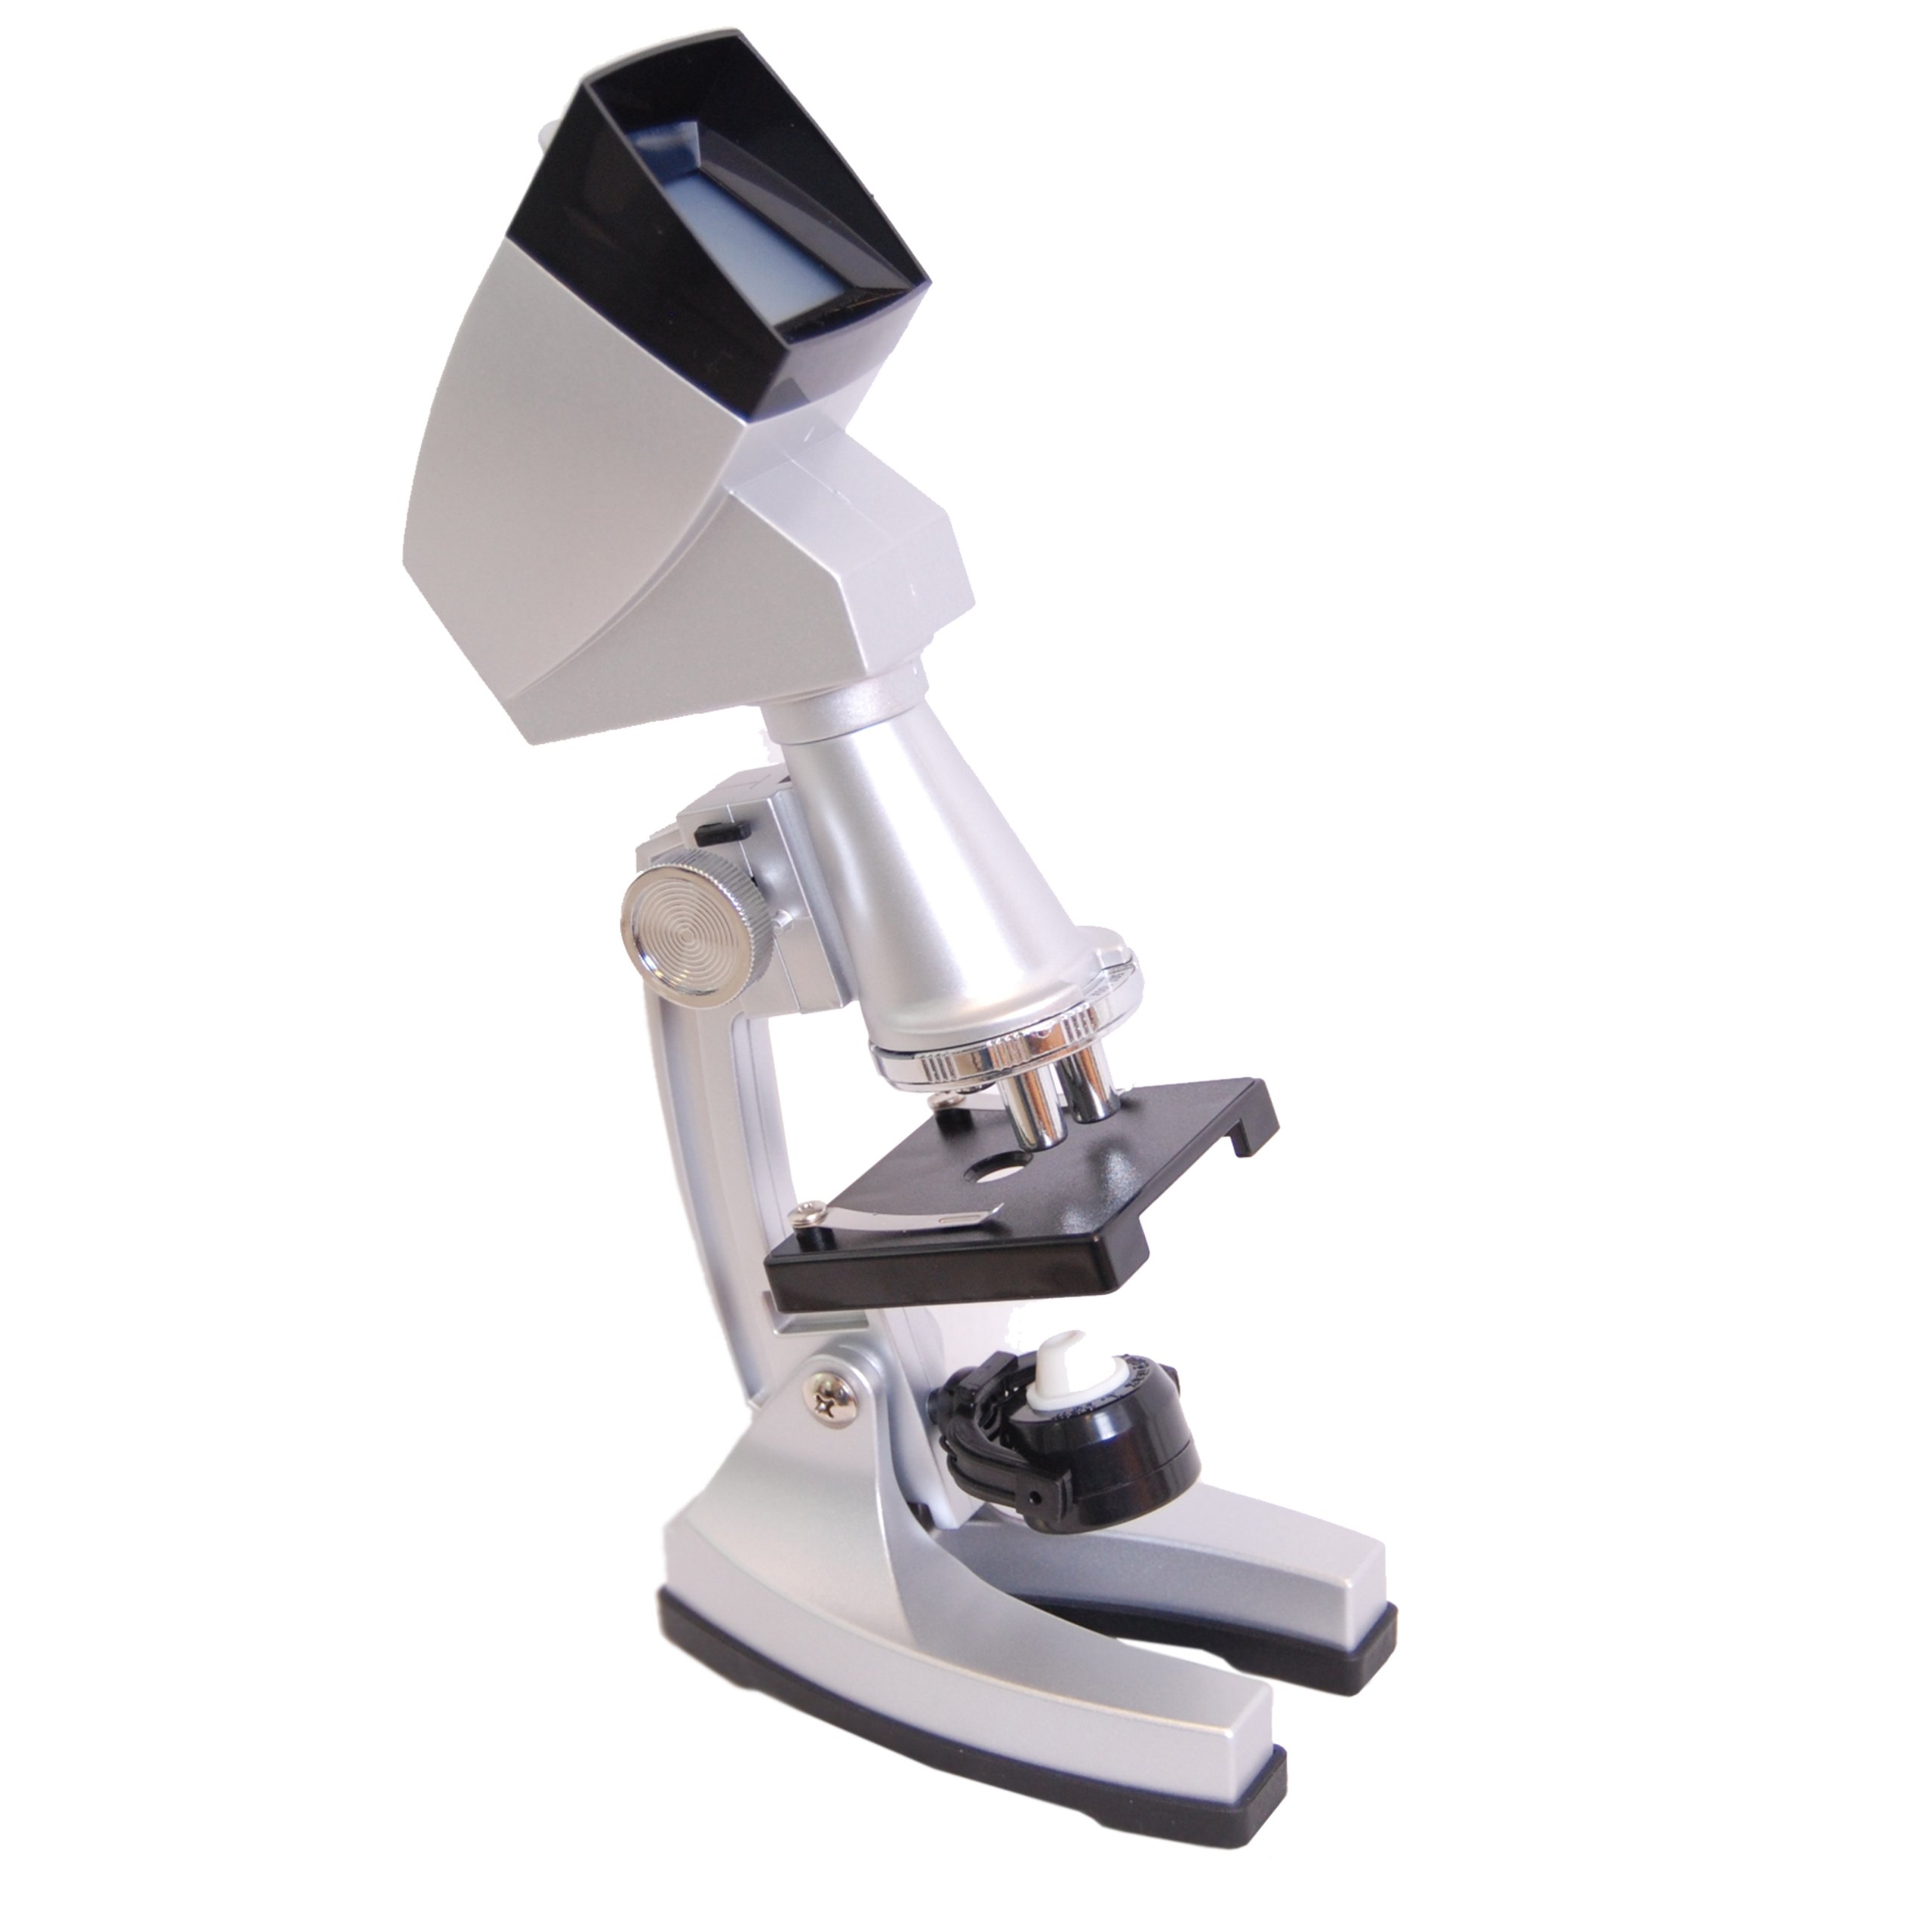 DynaSun TMPZ-C1200 Deluxe Innovatives Optik Mikroskop 100x 400x 1200x Vergrösserung mit Projektor Lern Schüler Set Komplett mit viel Zubehör